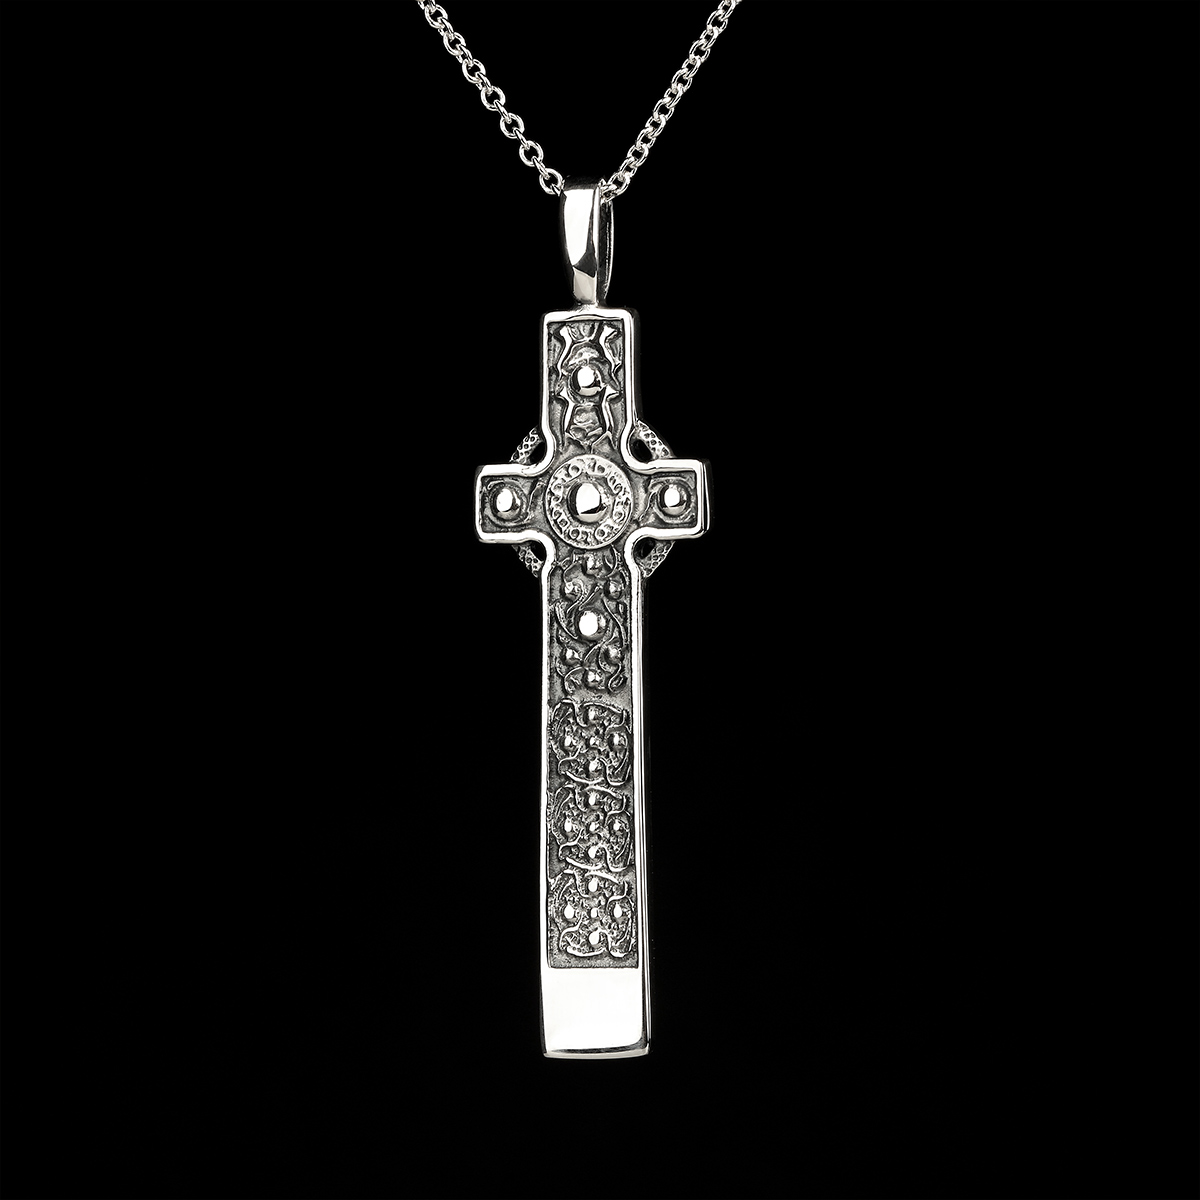 St Martin's Cross of Iona - Keltisches Kreuz aus Schottland - Sterling Silber